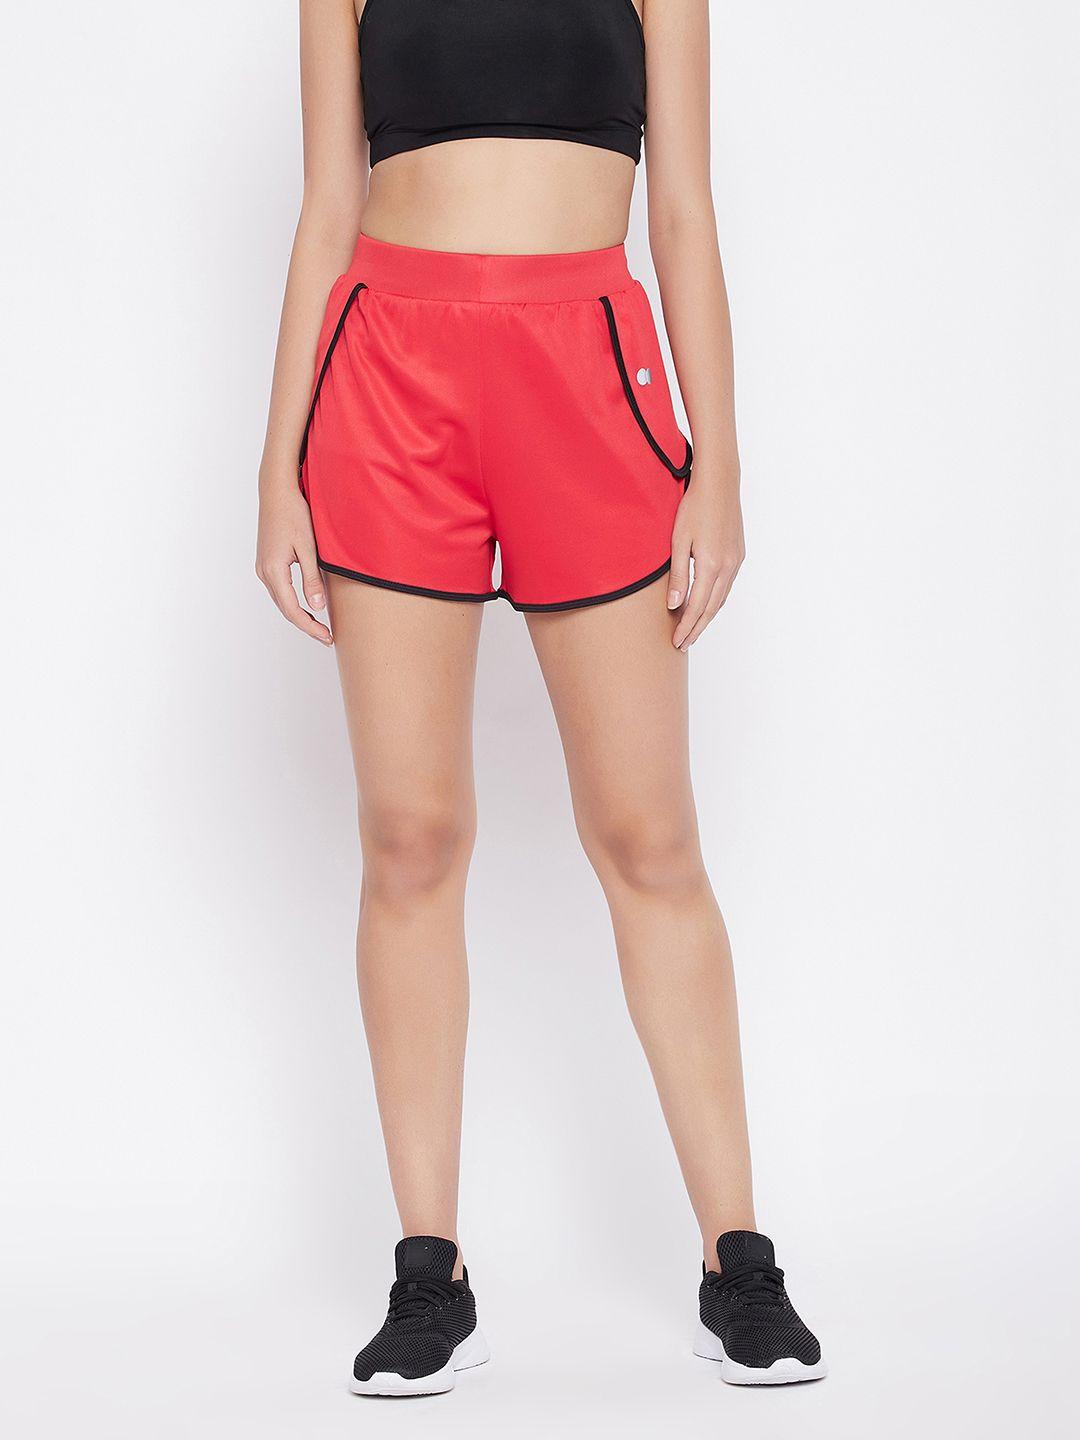 clovia women red slim fit cycling sports shorts